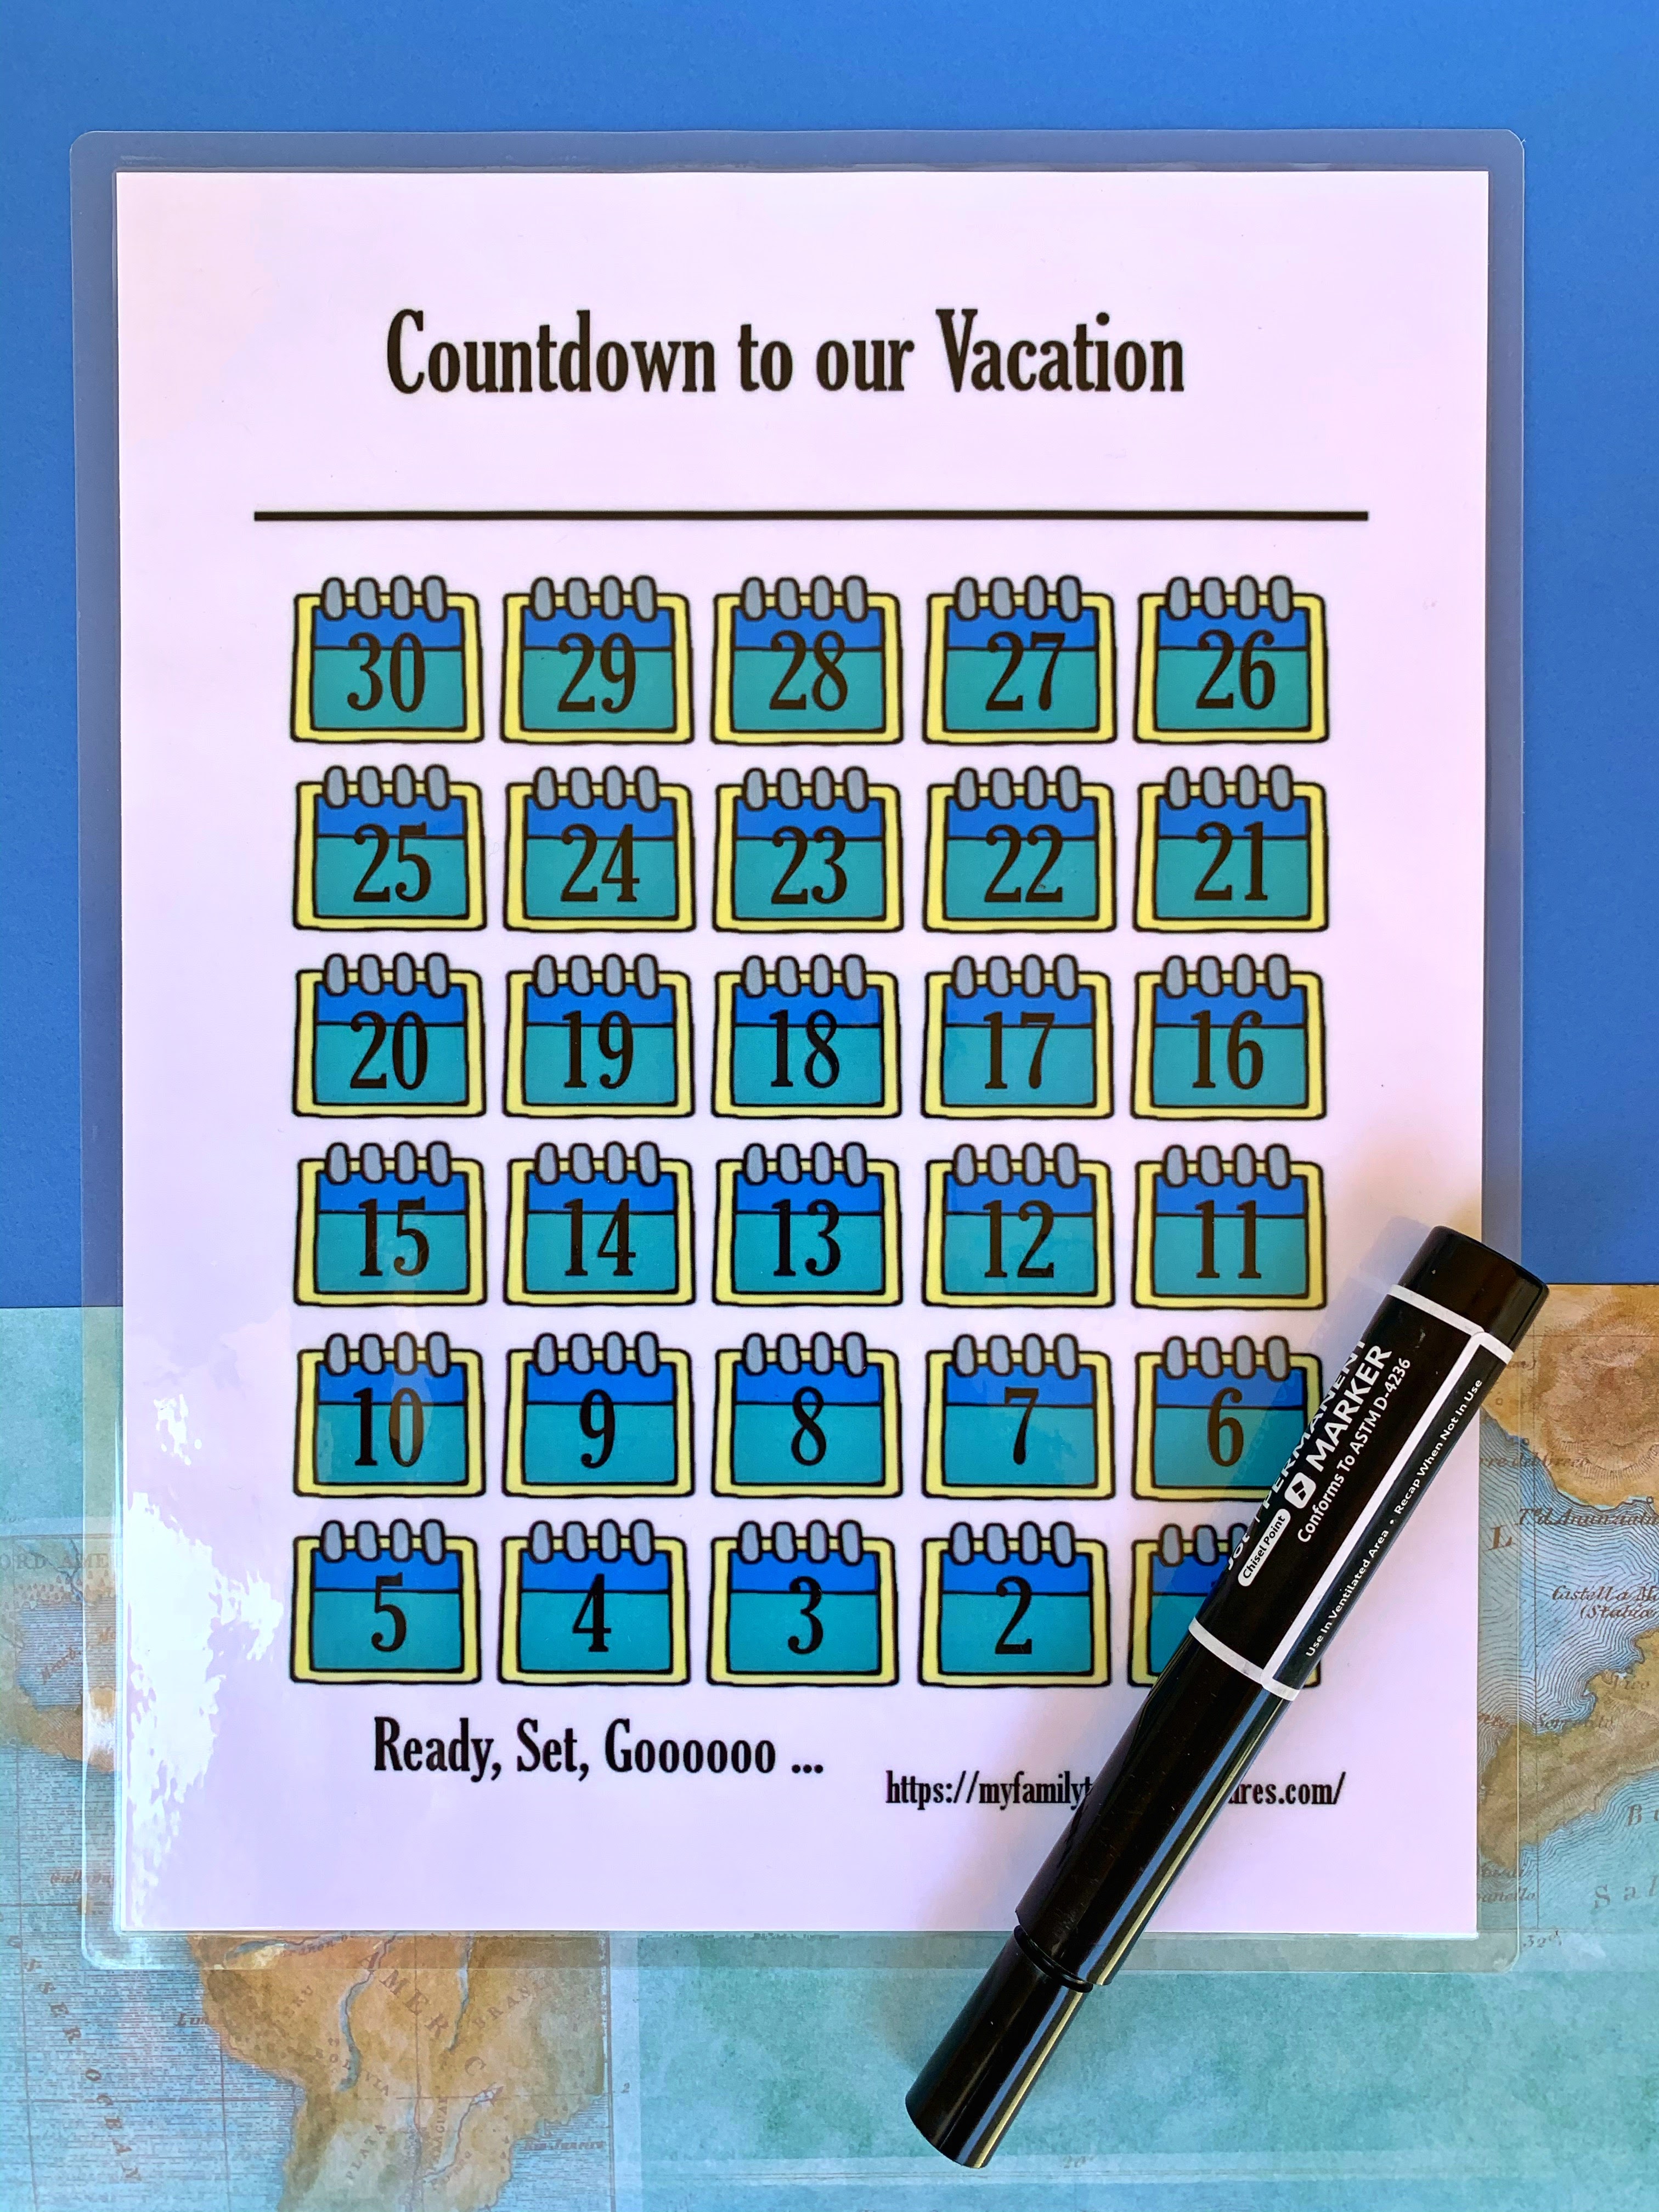 Online Countdown Calendar prntbl concejomunicipaldechinu gov co